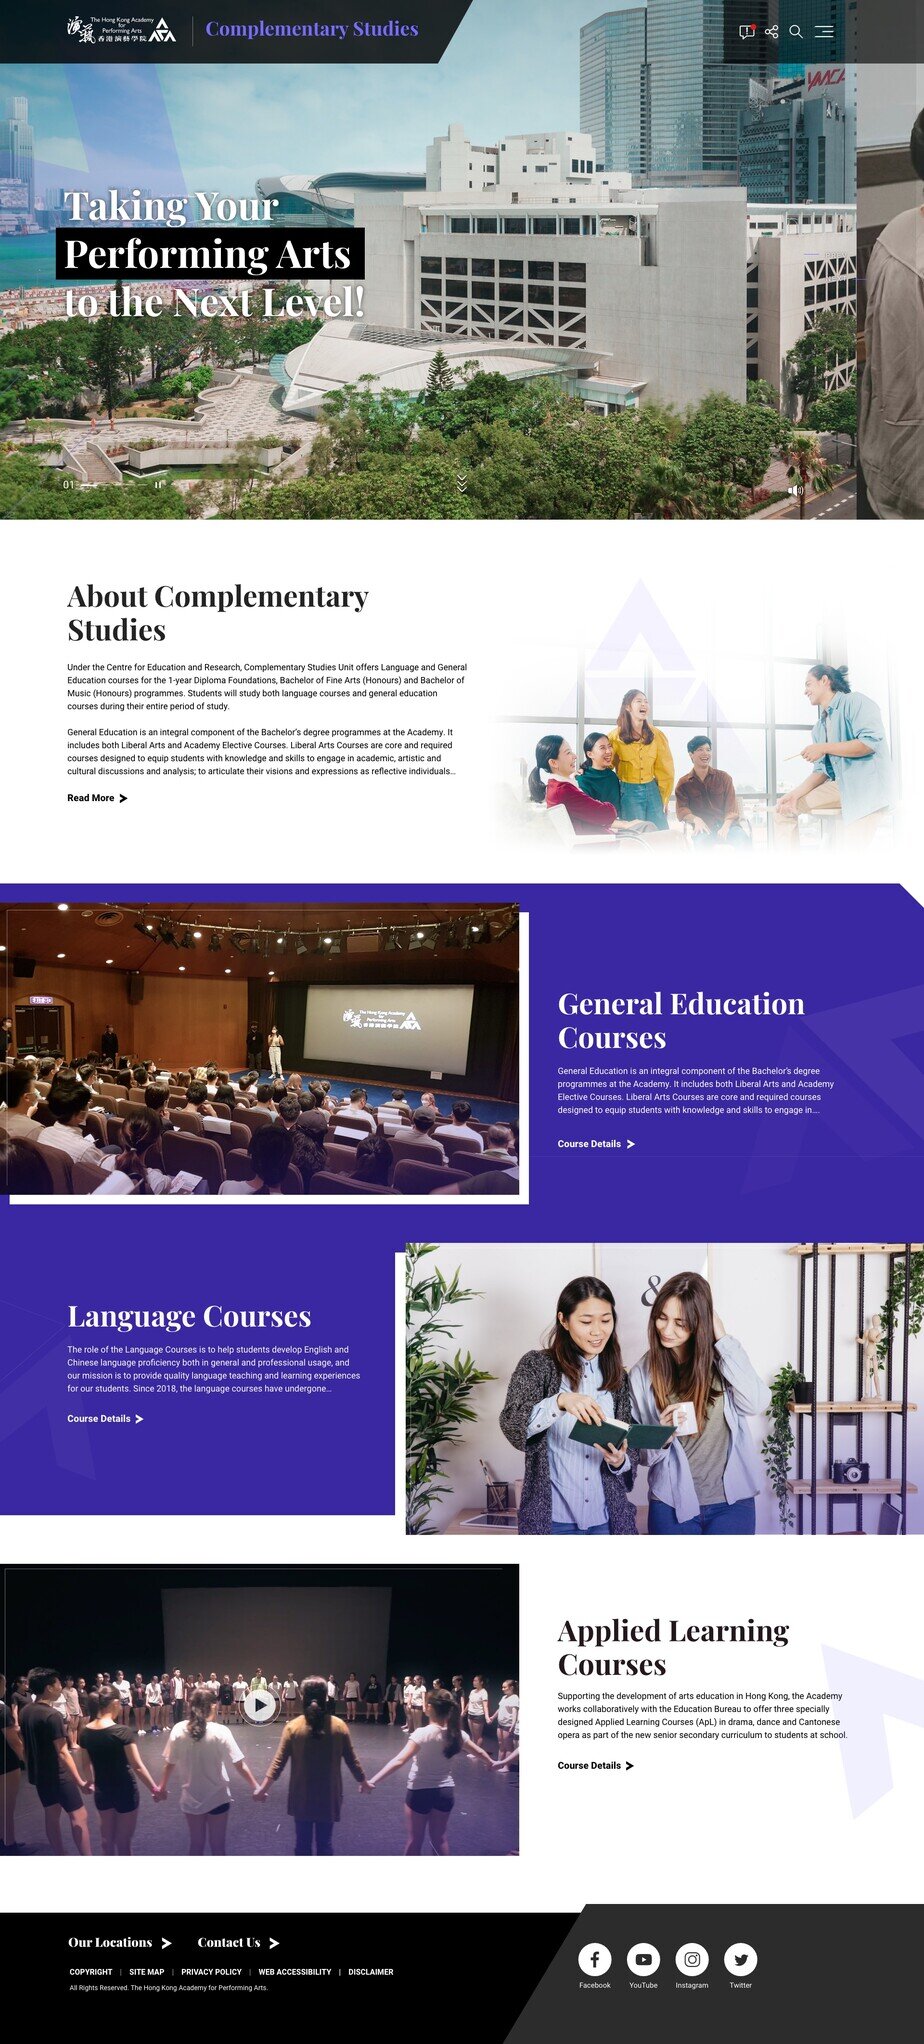 Hong Kong Academy for Performing Arts website screenshot for desktop version 5 of 7